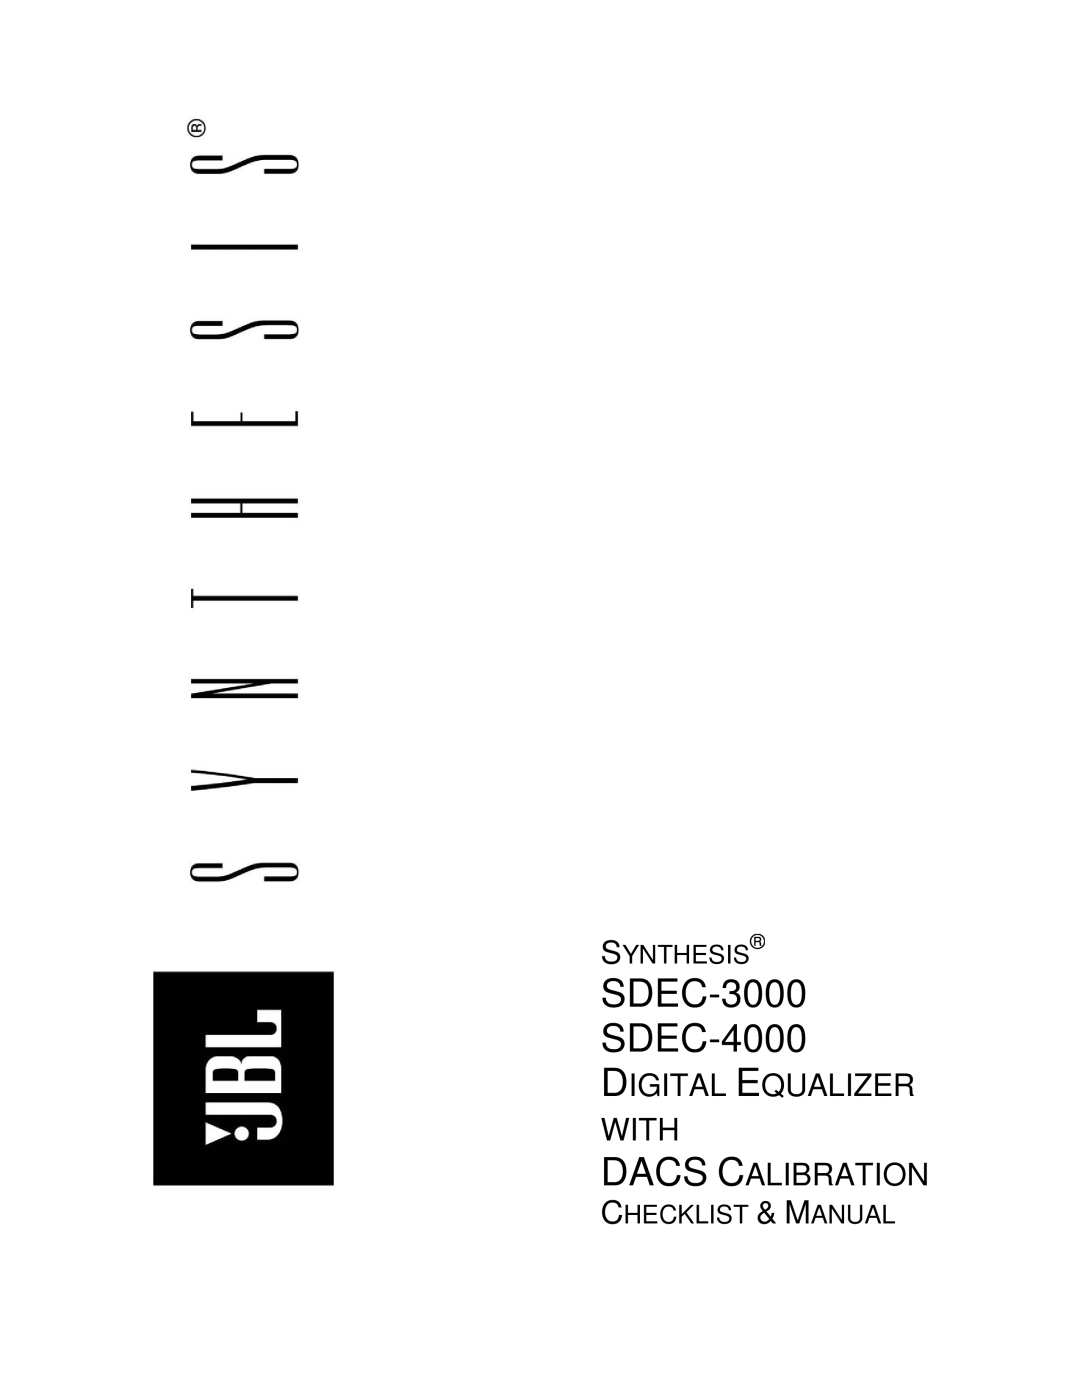 JBL manual SDEC-3000 SDEC-4000, Digital Equalizer With Dacs Calibration, Synthesis, Checklist & Manual 